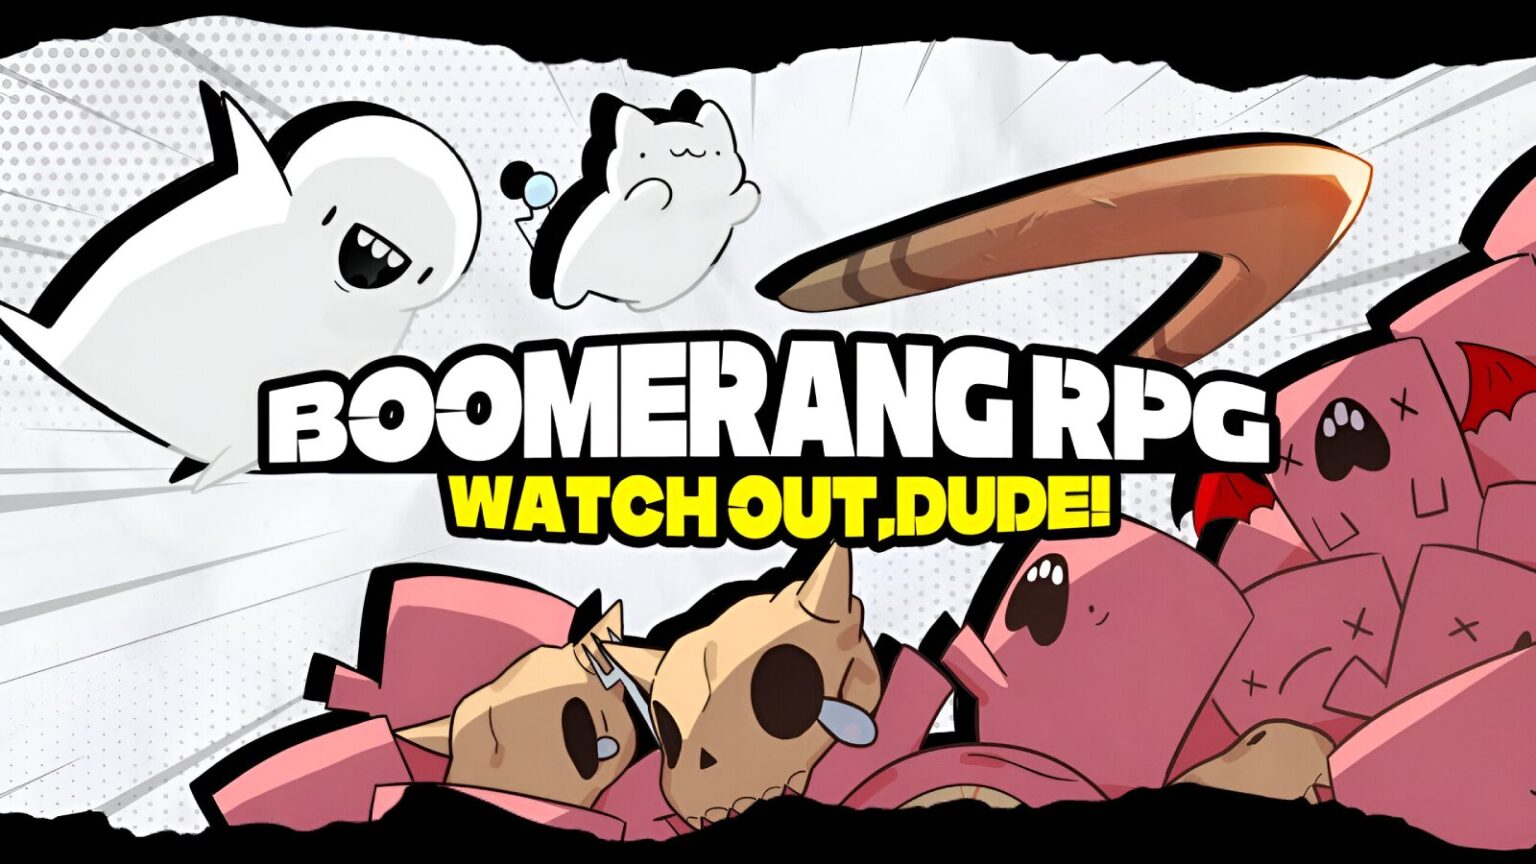 Ghosts dodge boomerang in Boomerang RPG mobile game